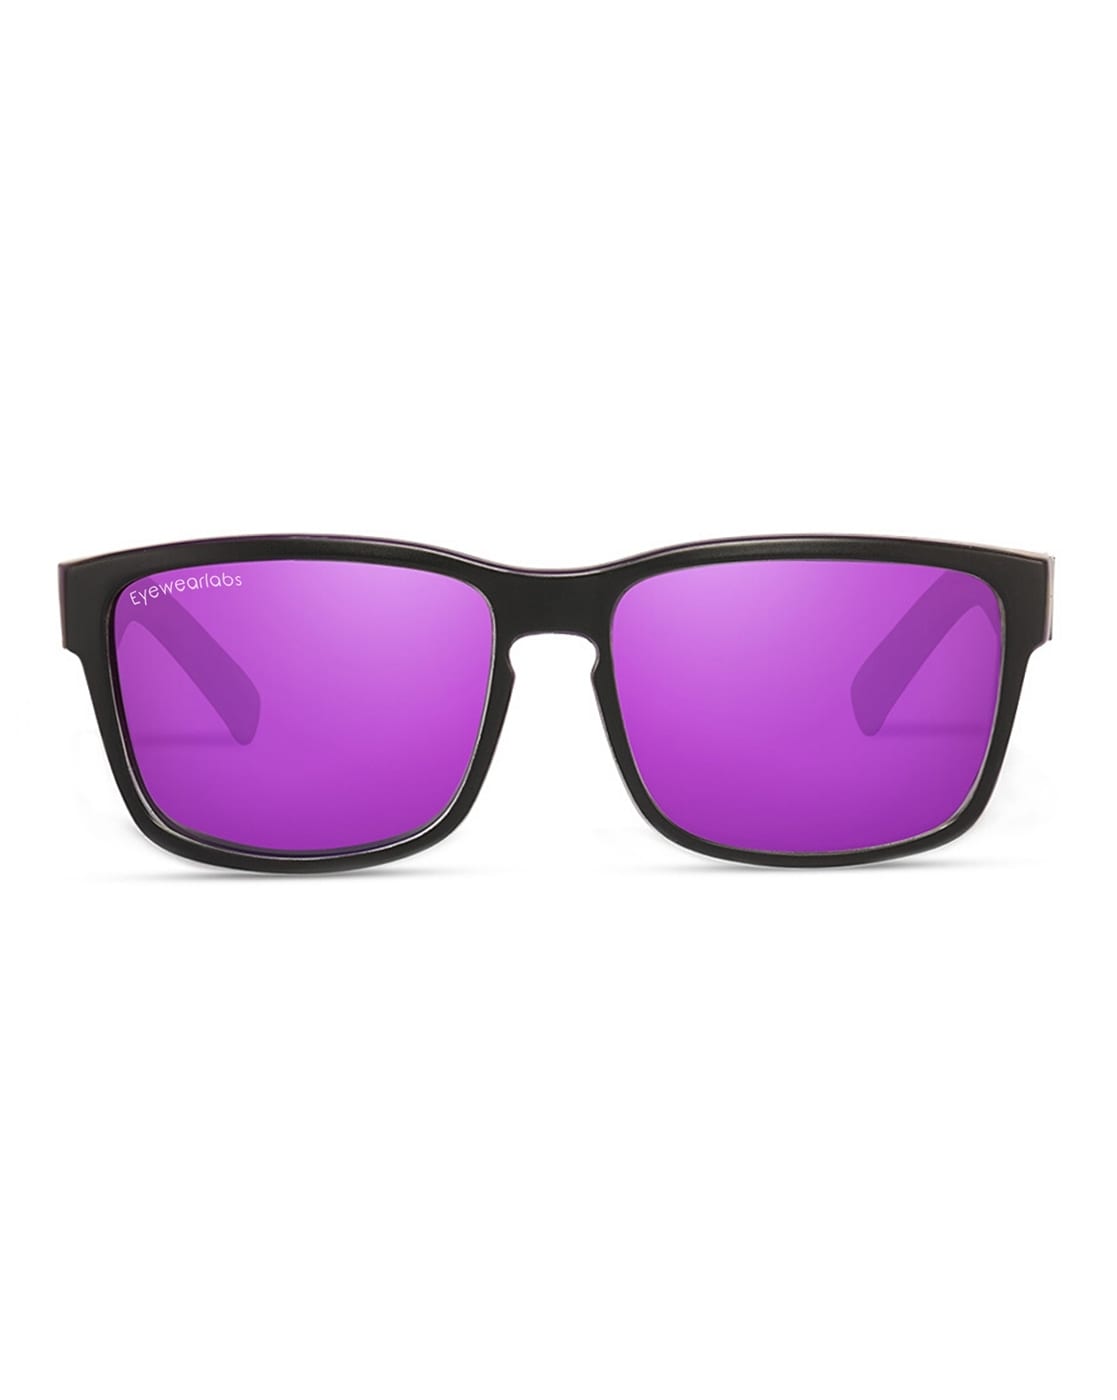 Polarized Sunglasses for Kids: Ultimate UV Guard